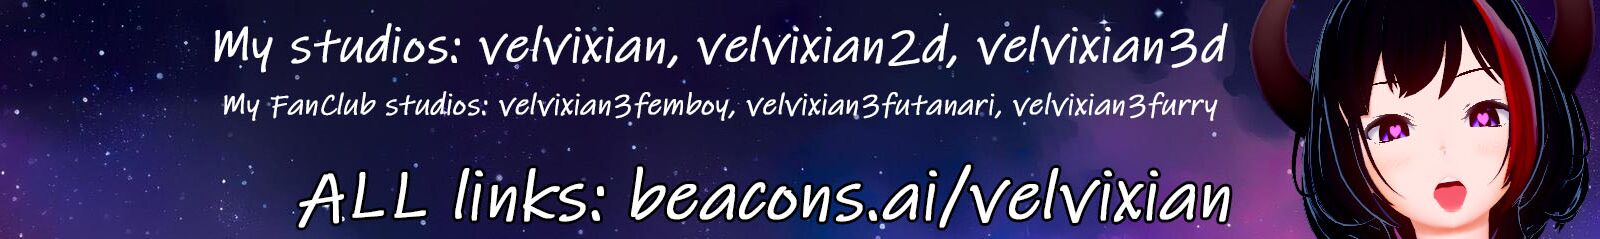 Velvixian 3 Femboy